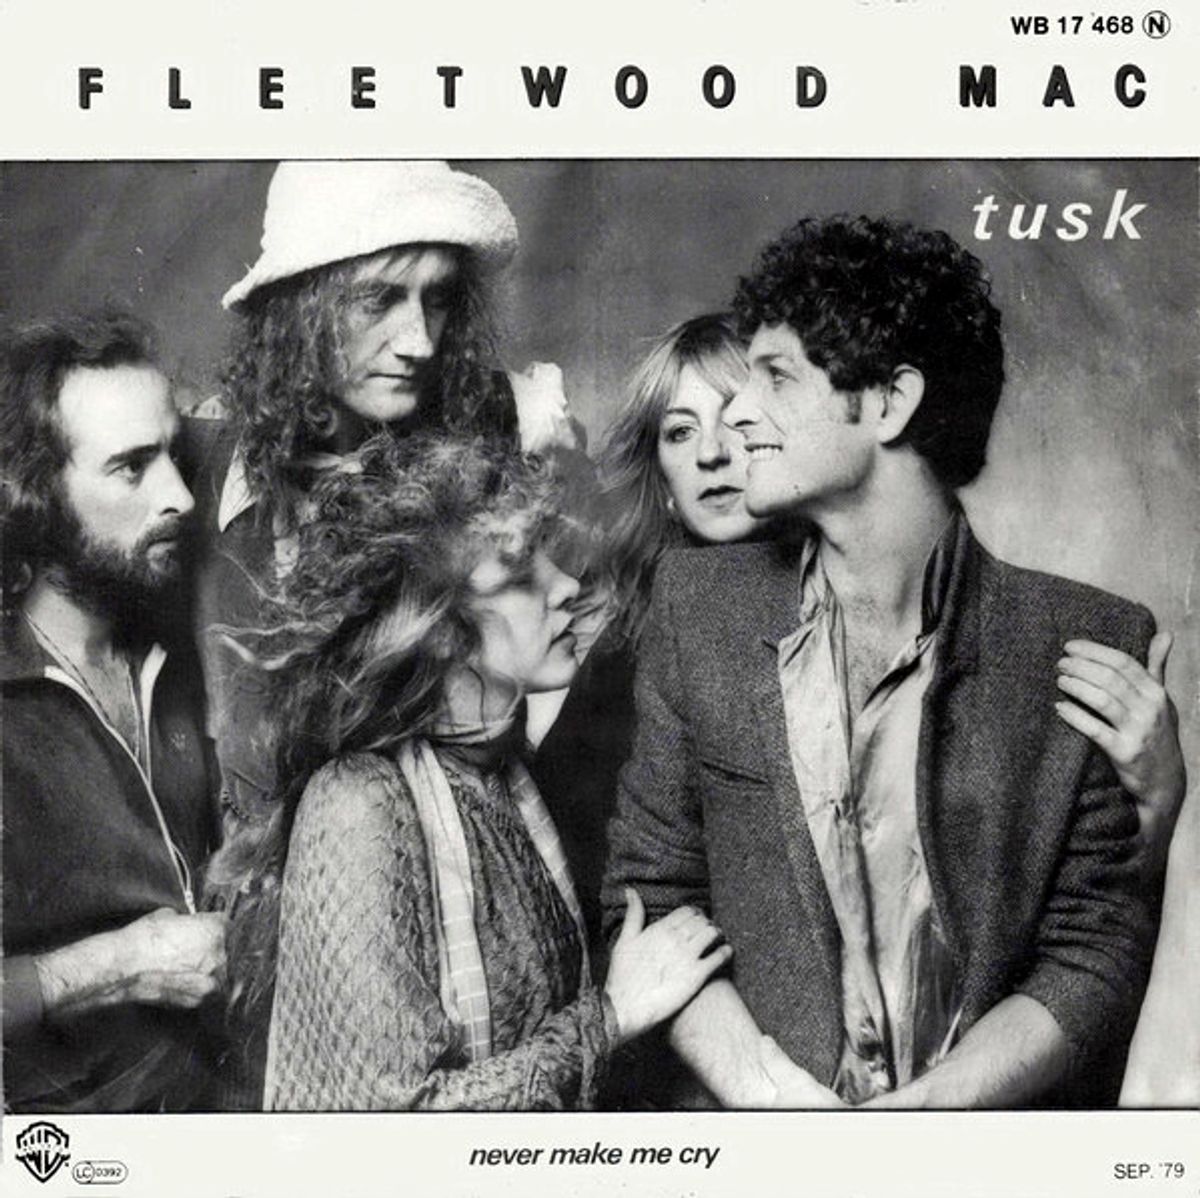 #Koperwaren - Fleetwood Mac - Tusk (1979)